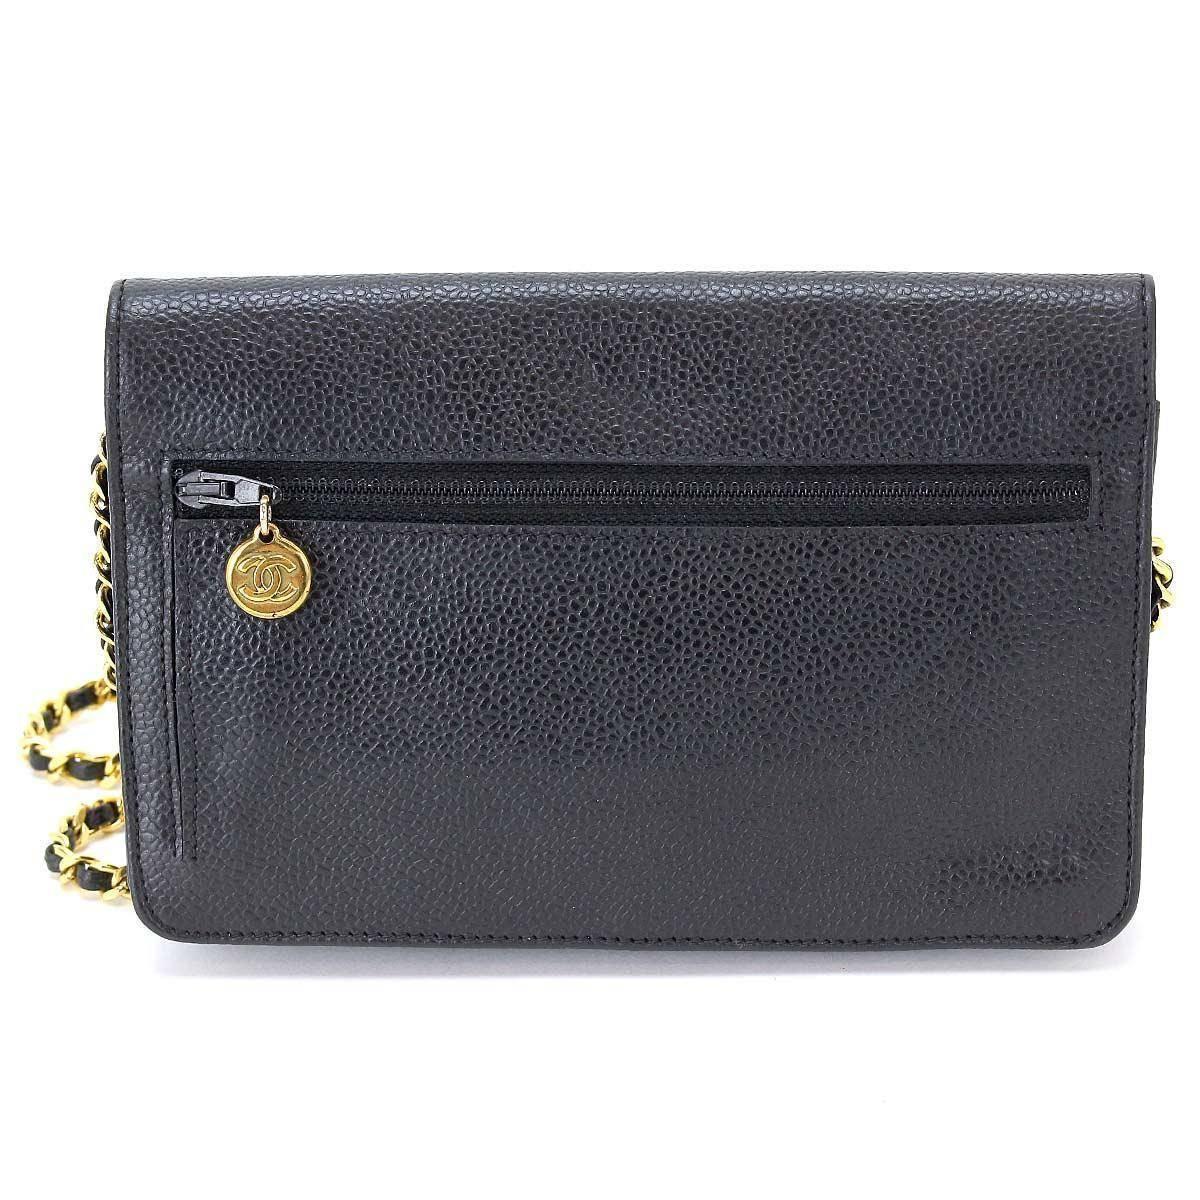 Chanel Black Caviar Leather WOC Wallet on Chain Crossbody Flap Shoulder Bag 1